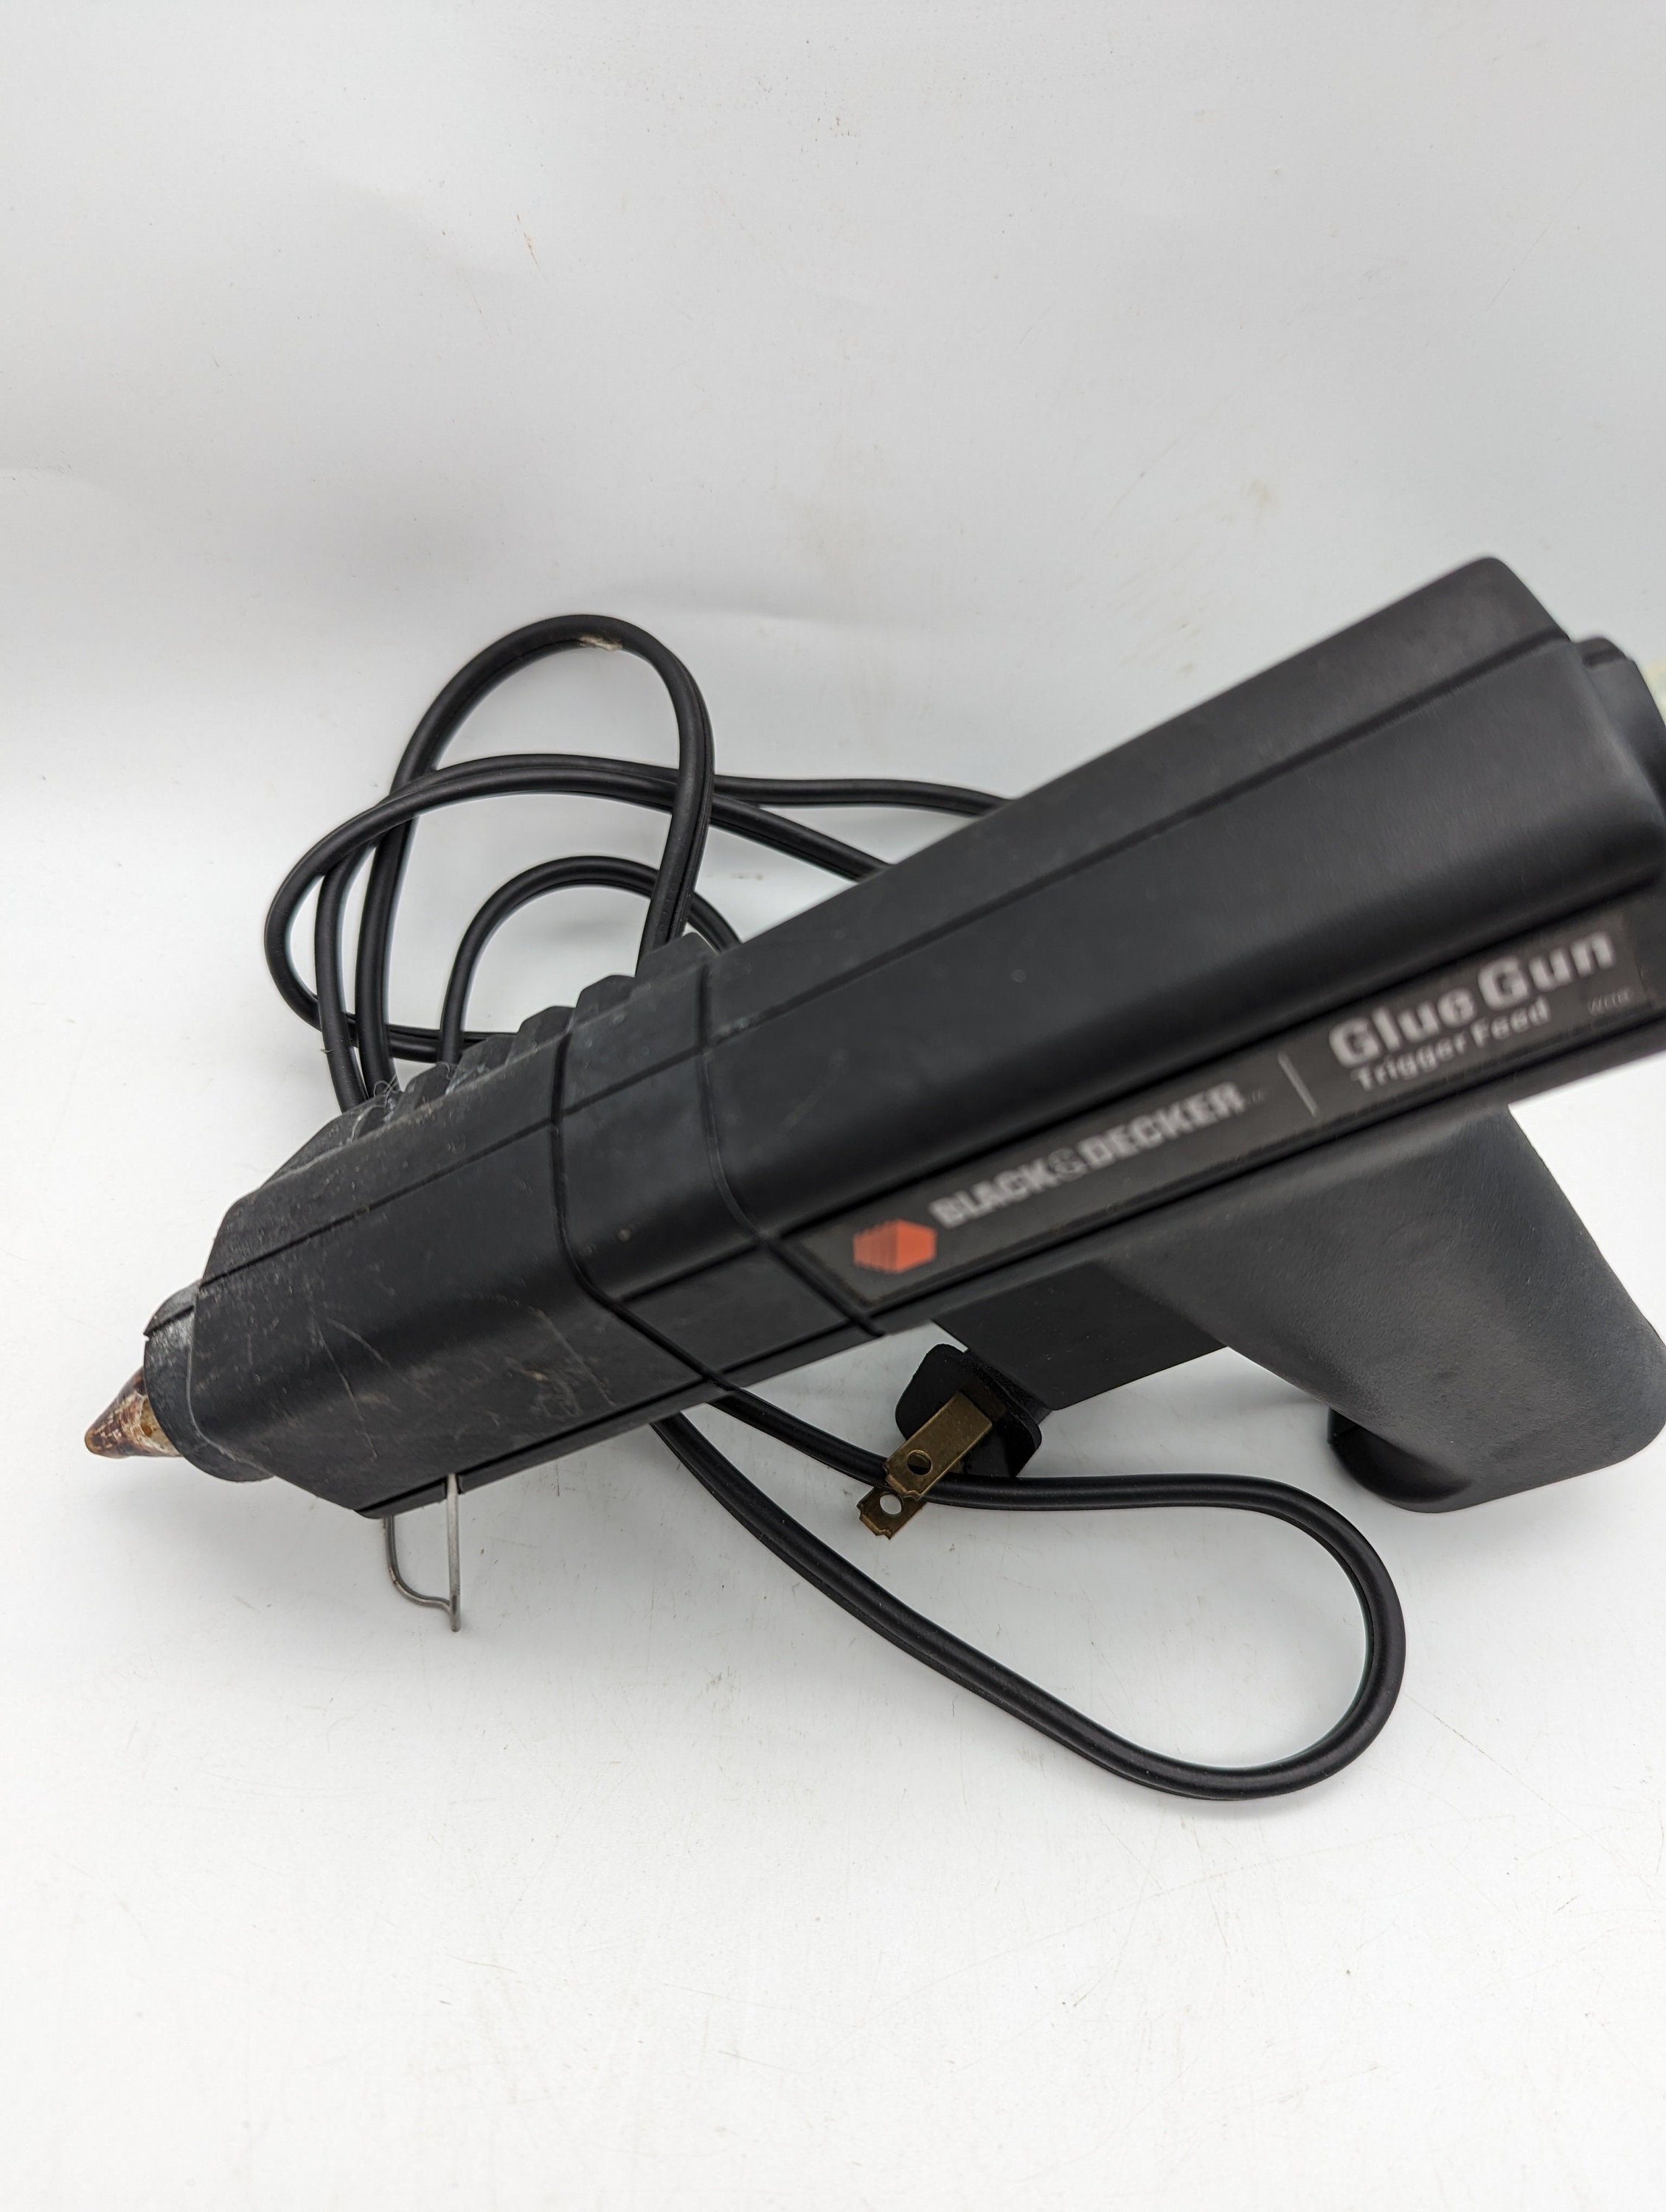 Vintage Black & Decker Electric Trigger Feed Glue Gun Model 9735 Heating NEW